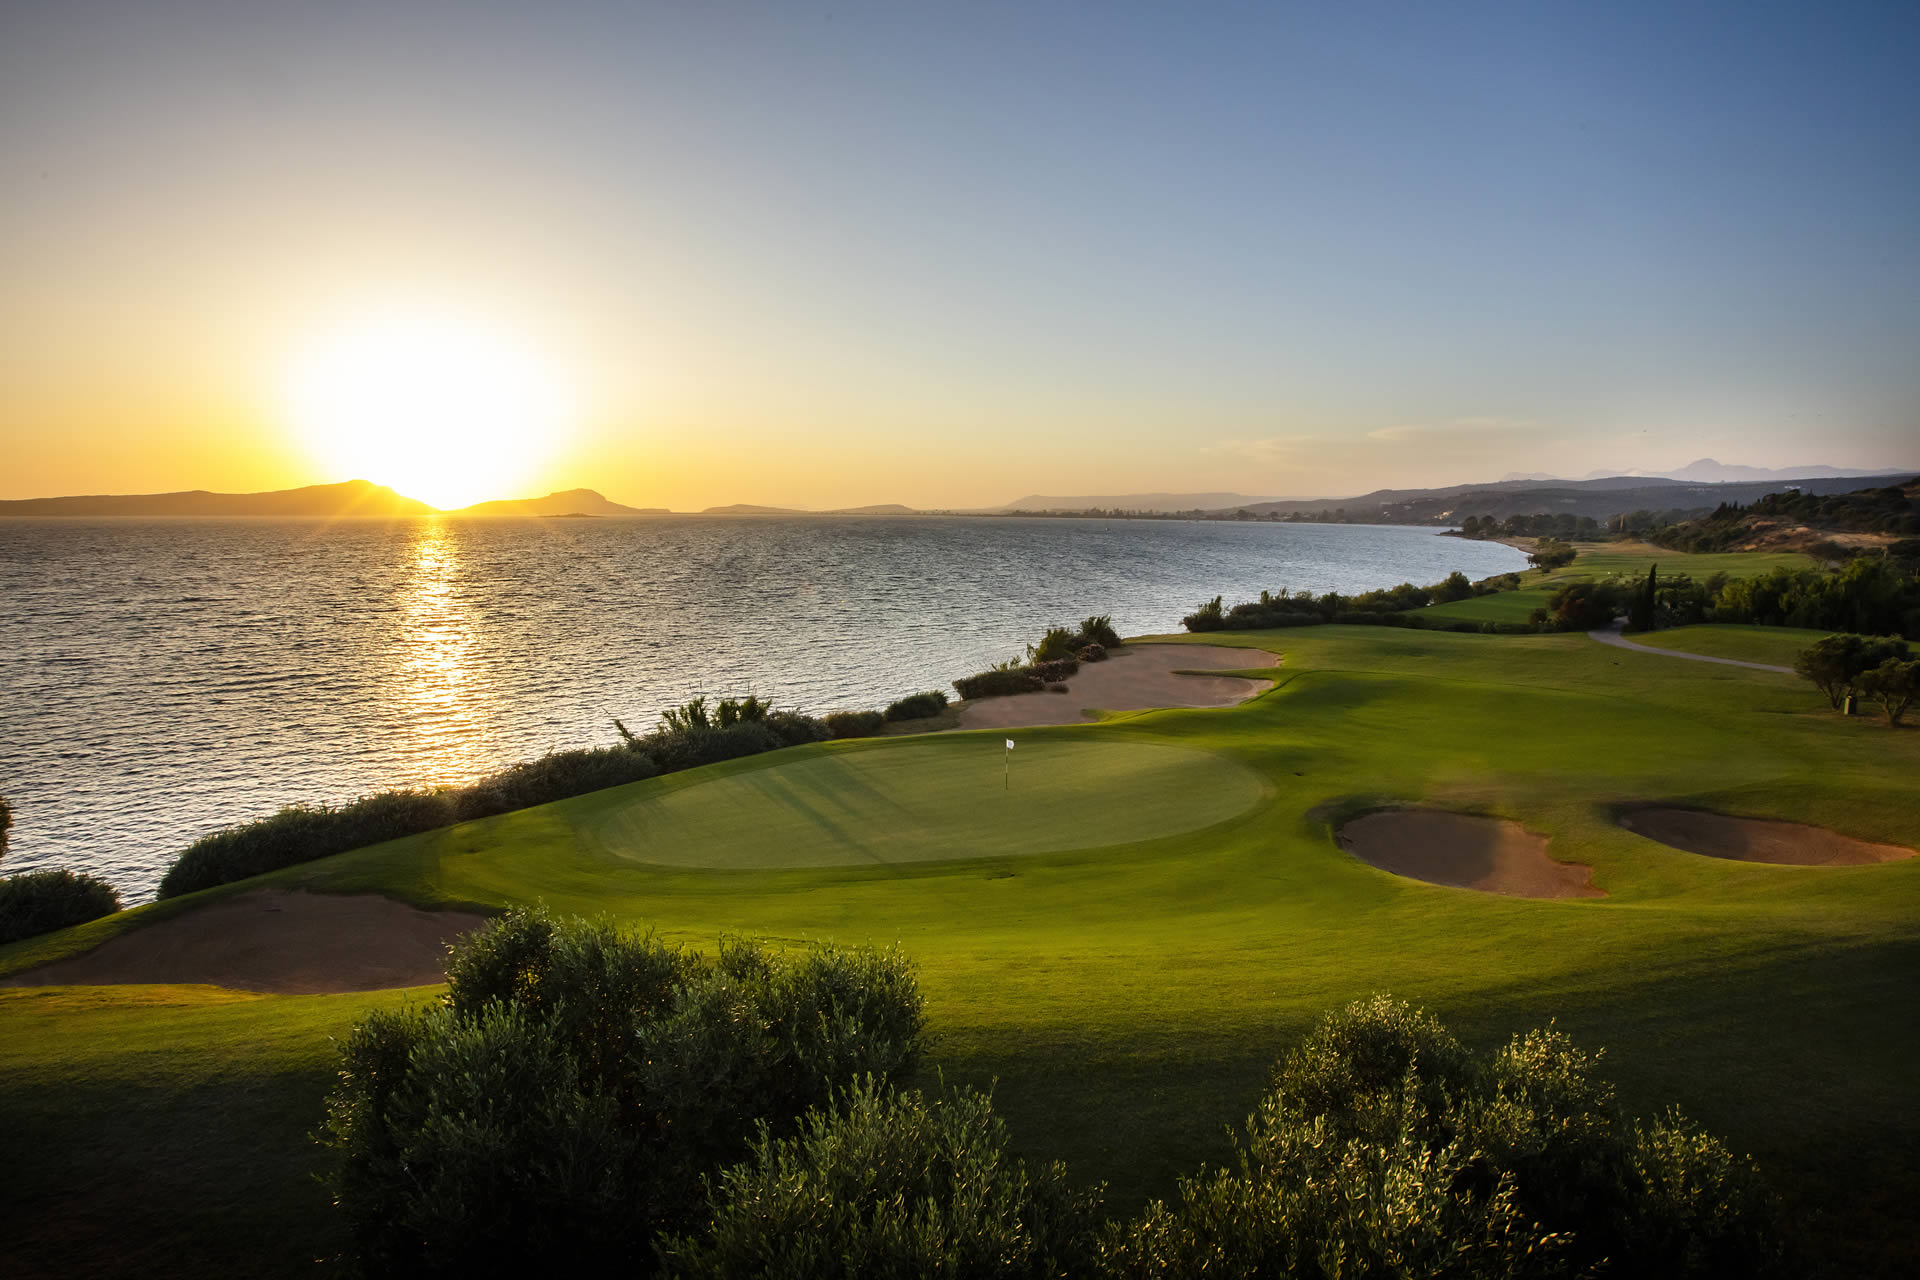 Golf in Greece